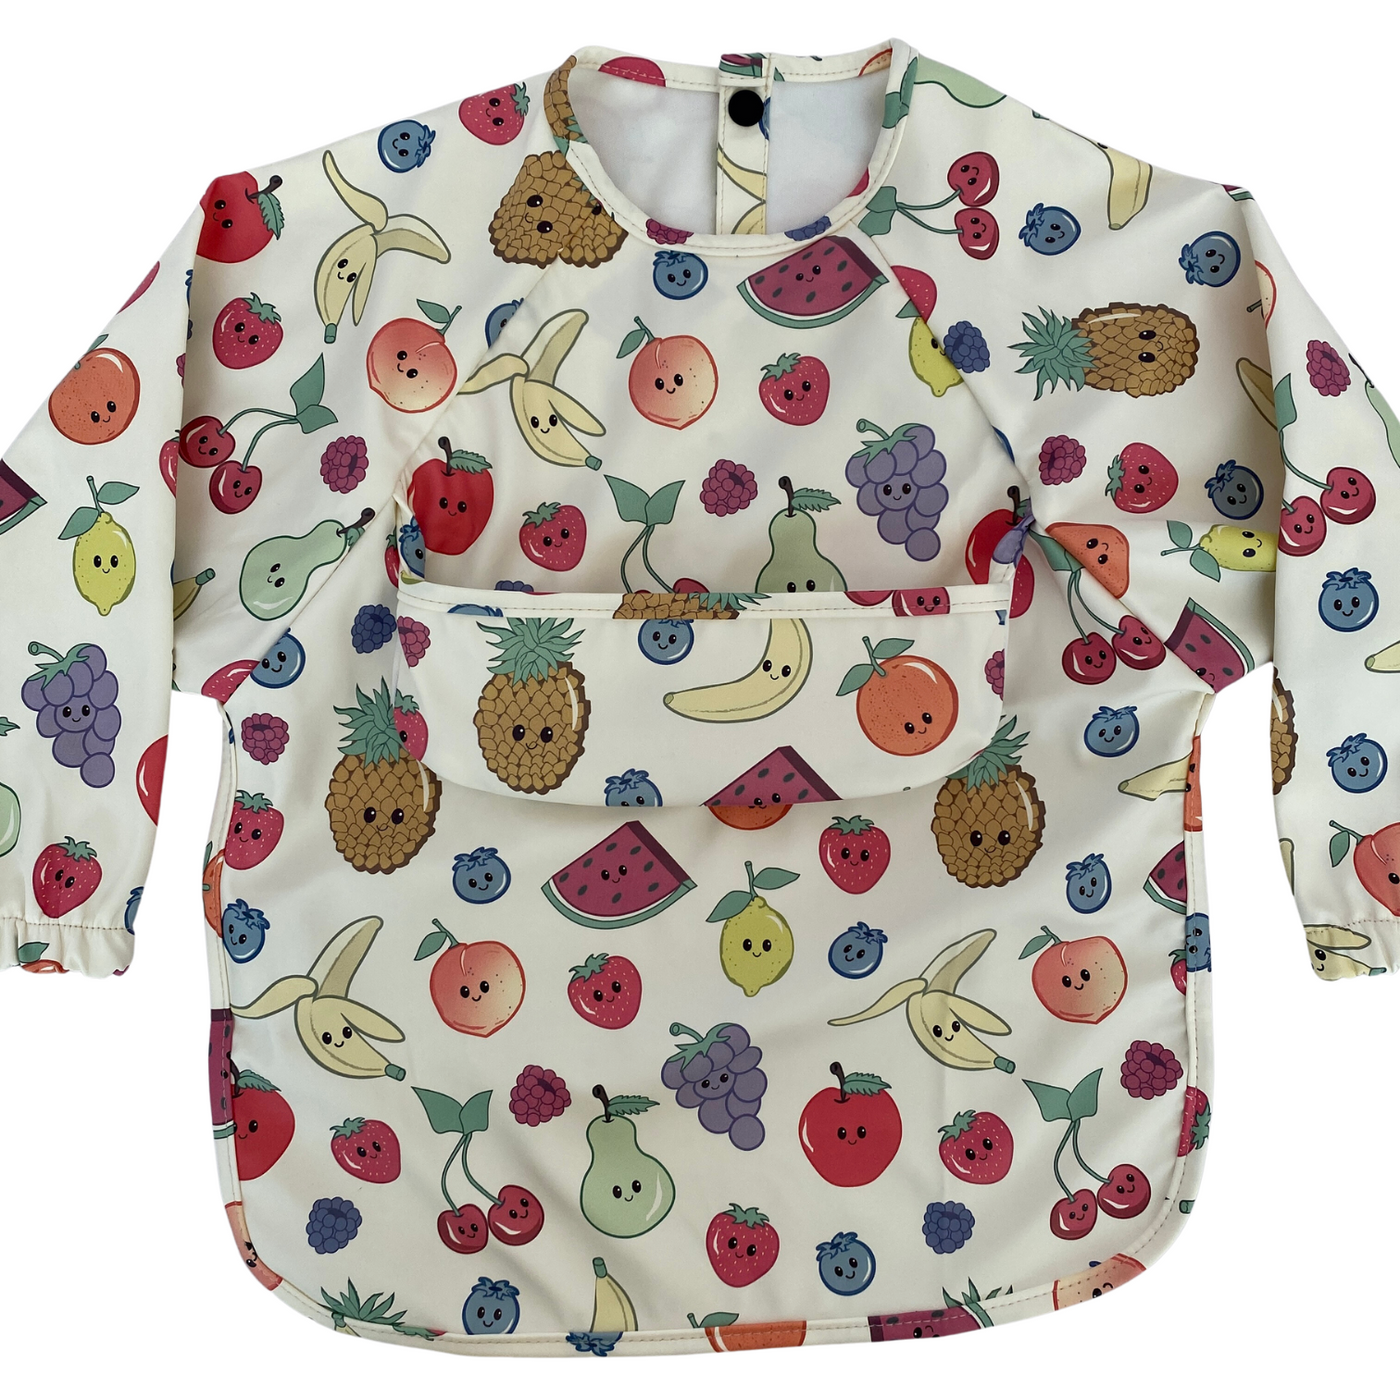 Waterproof Bib Apron with long sleeves and pocket: Cute Fruits